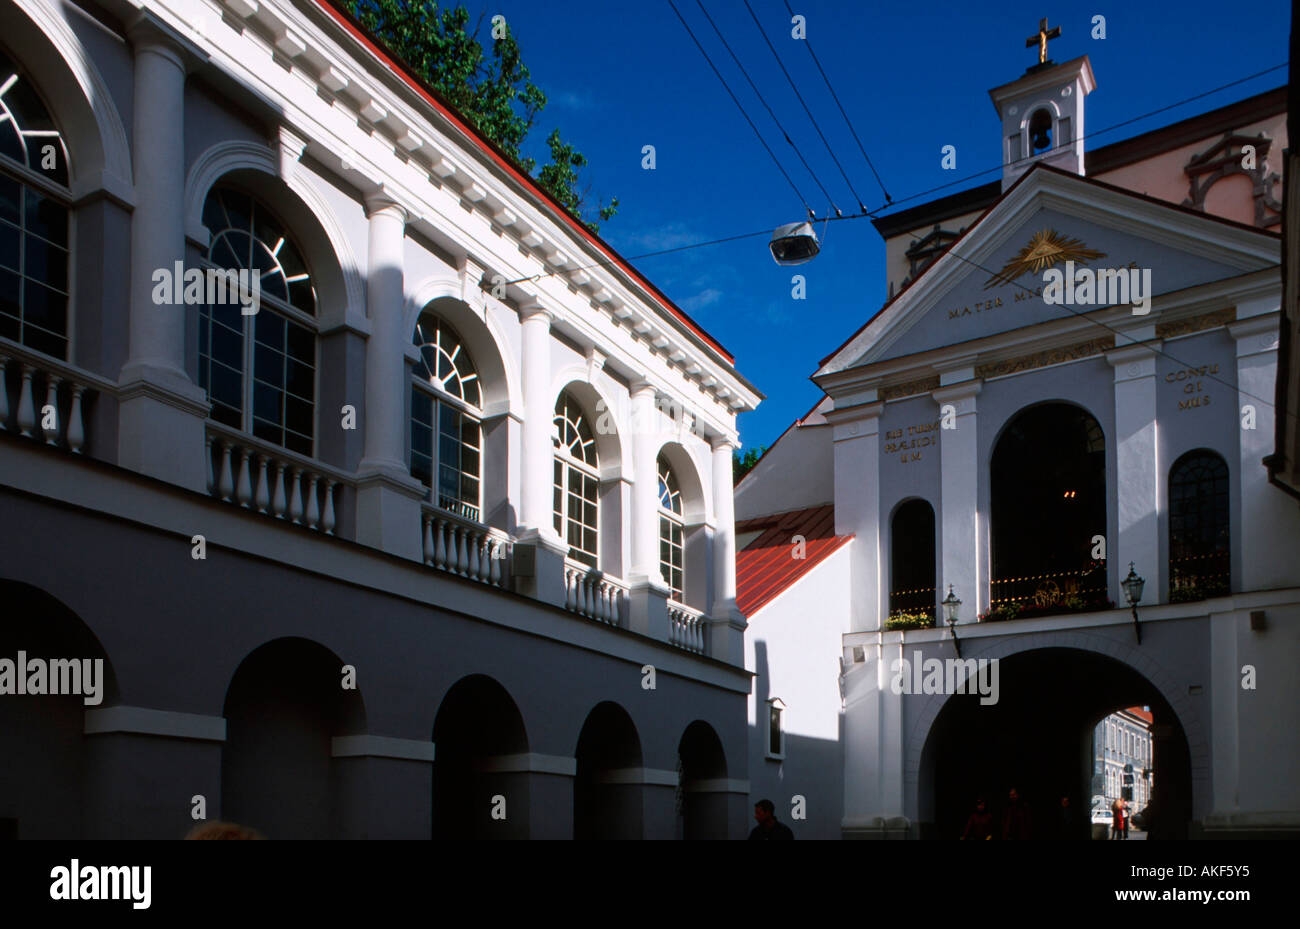 Osteuropa, Litauen, Vilnius, Altstadt, Ausros Vartu, Ostra-Brama-Tor (Tor der Morgenröte) Stock Photo